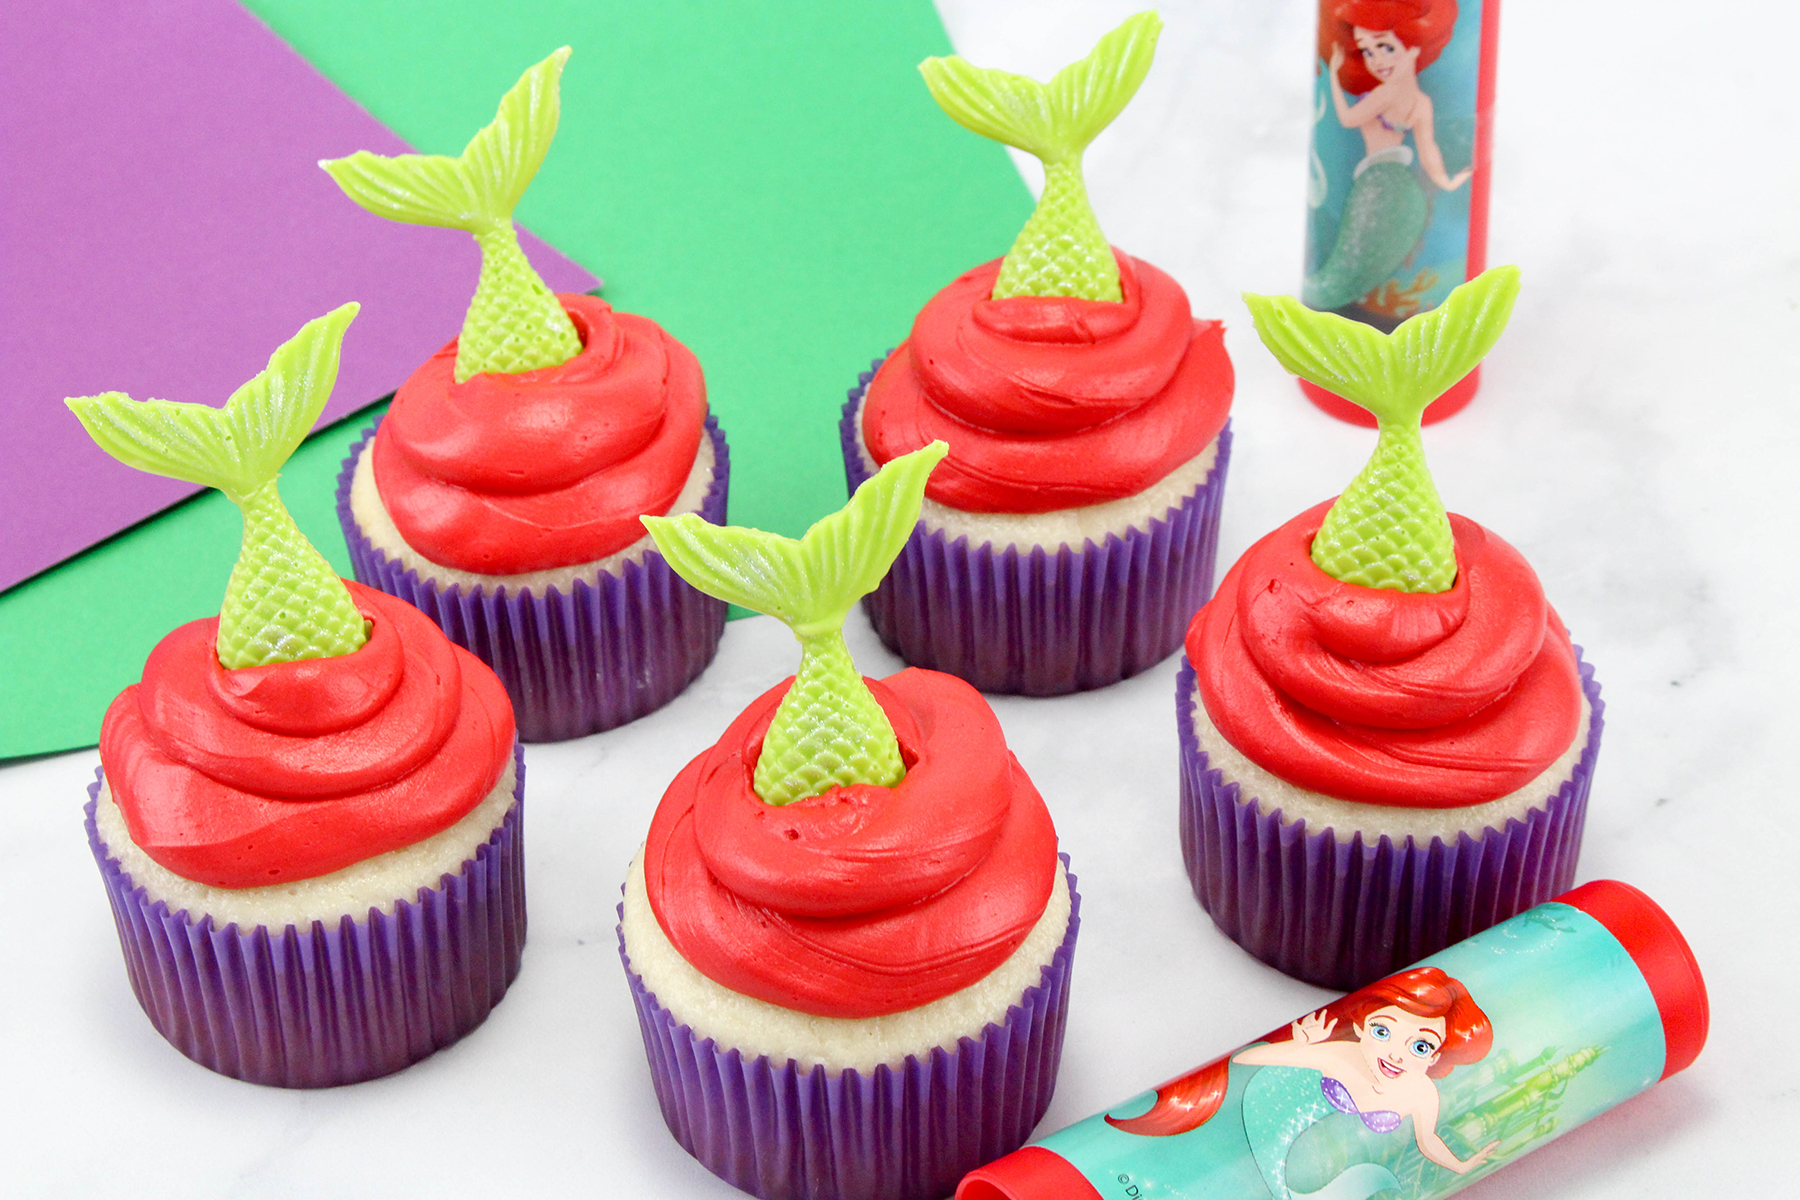 The Little Mermaid Cupcakes